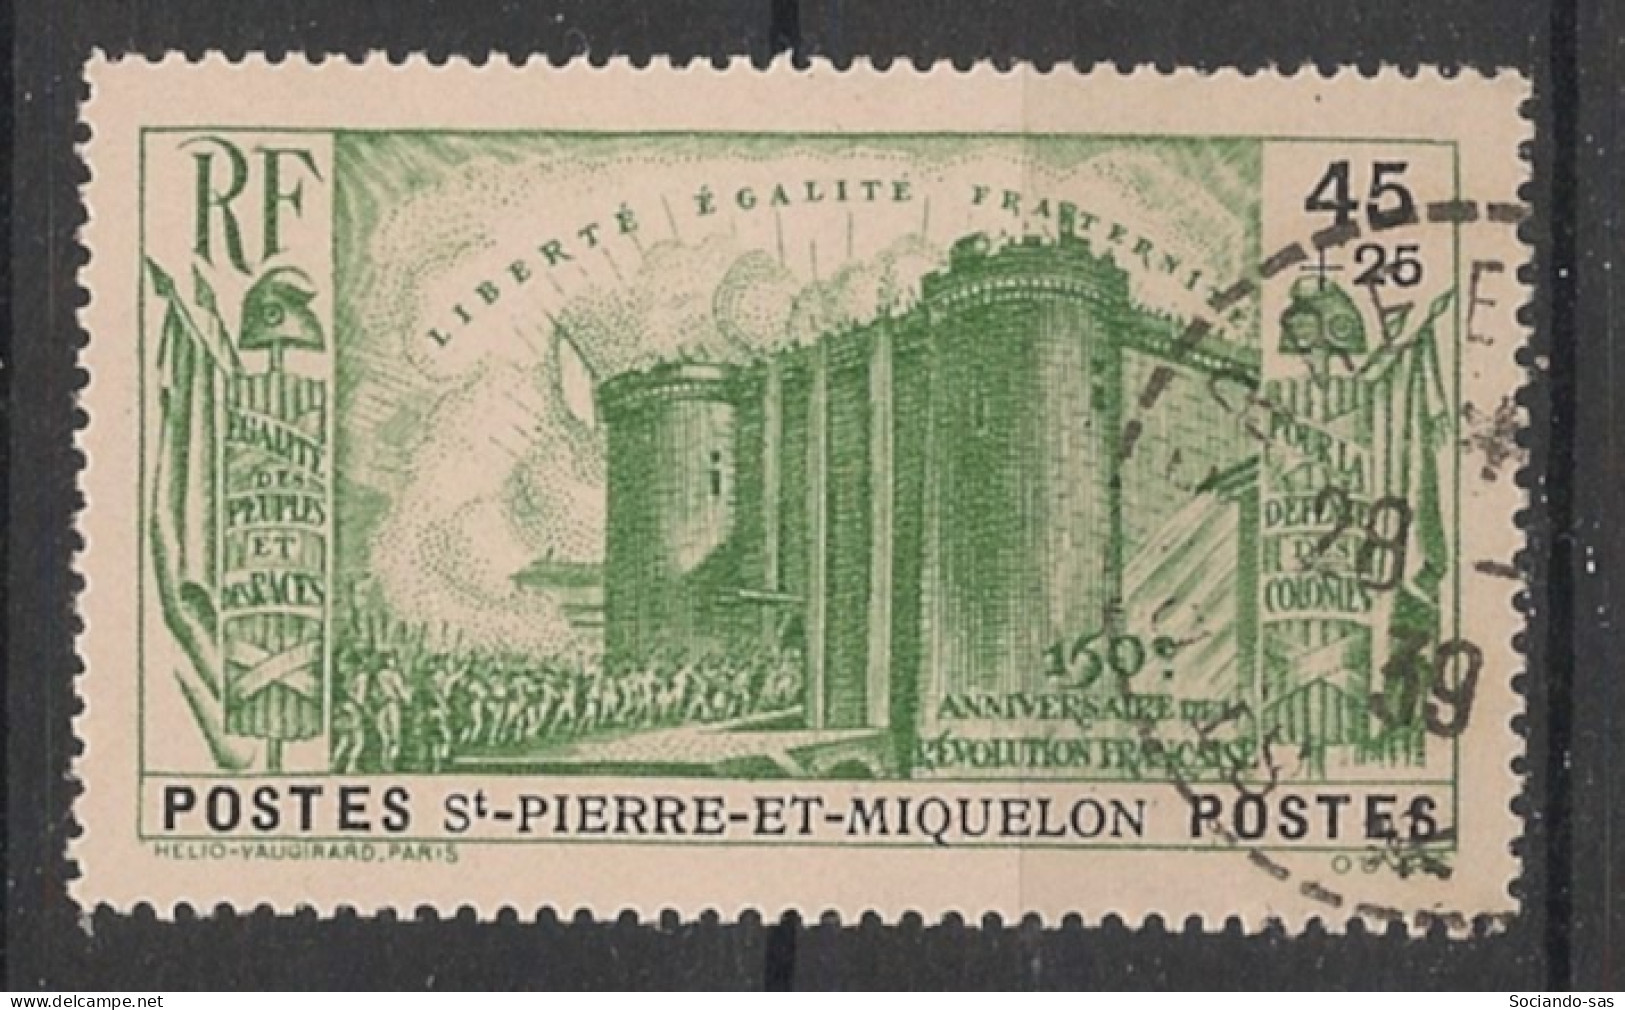 SPM - 1939 - N°YT. 191 - Révolution Française 45c + 25c Vert - Oblitéré / Used - Usados